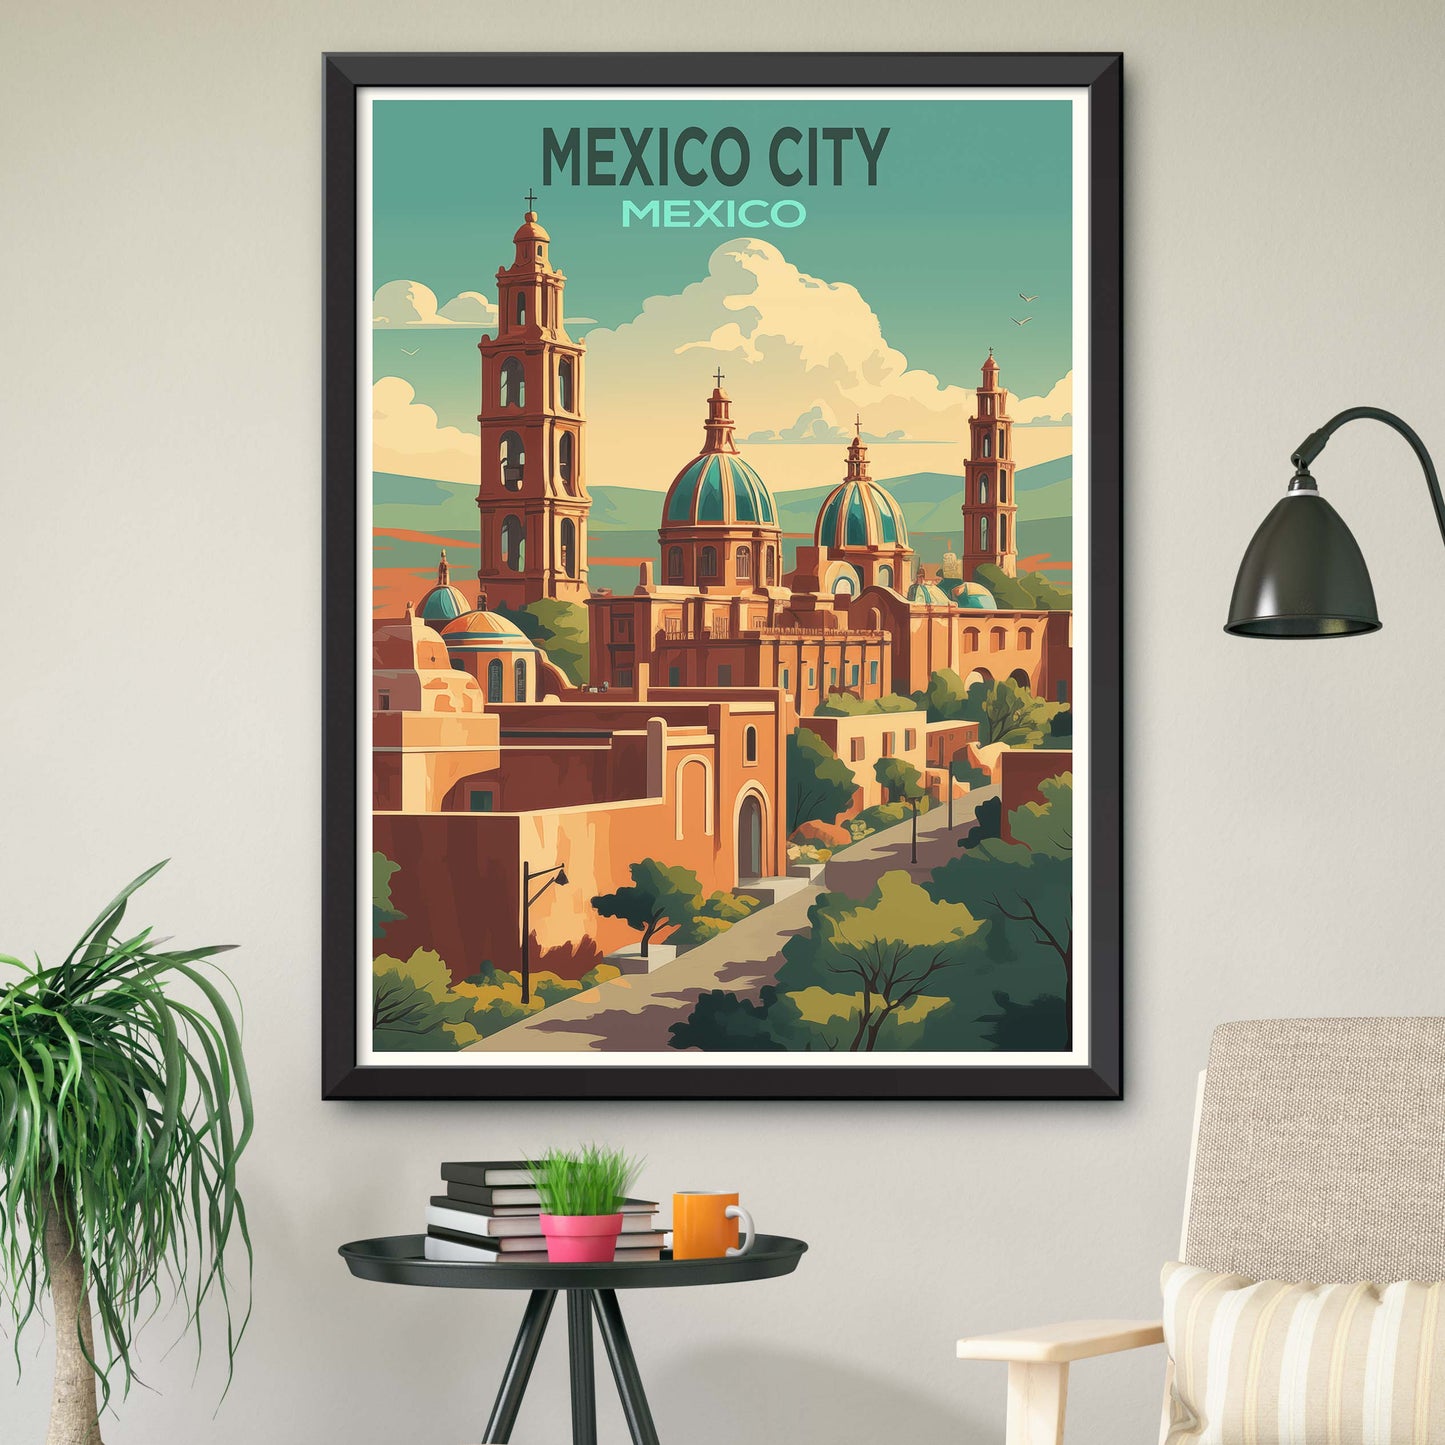 Mexico City Mosaic: Vibrant Hues of Mexican Culture